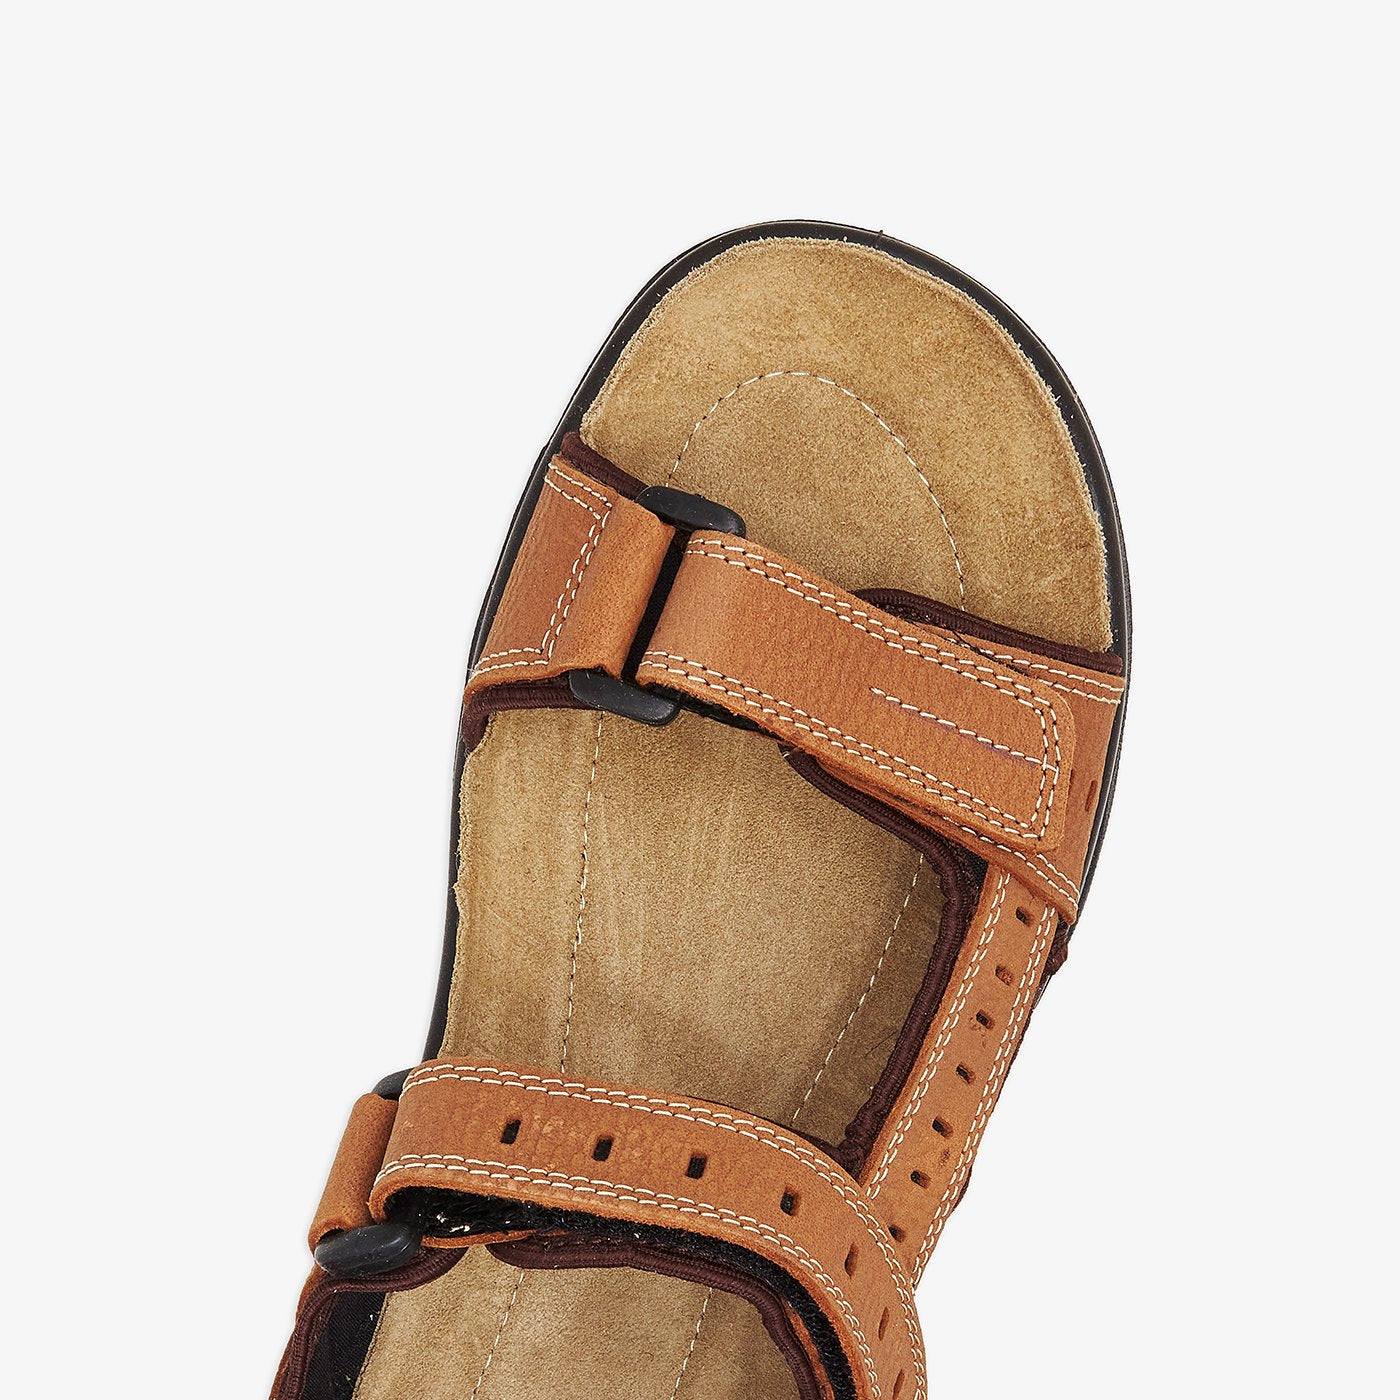 Modern Sandals for Men